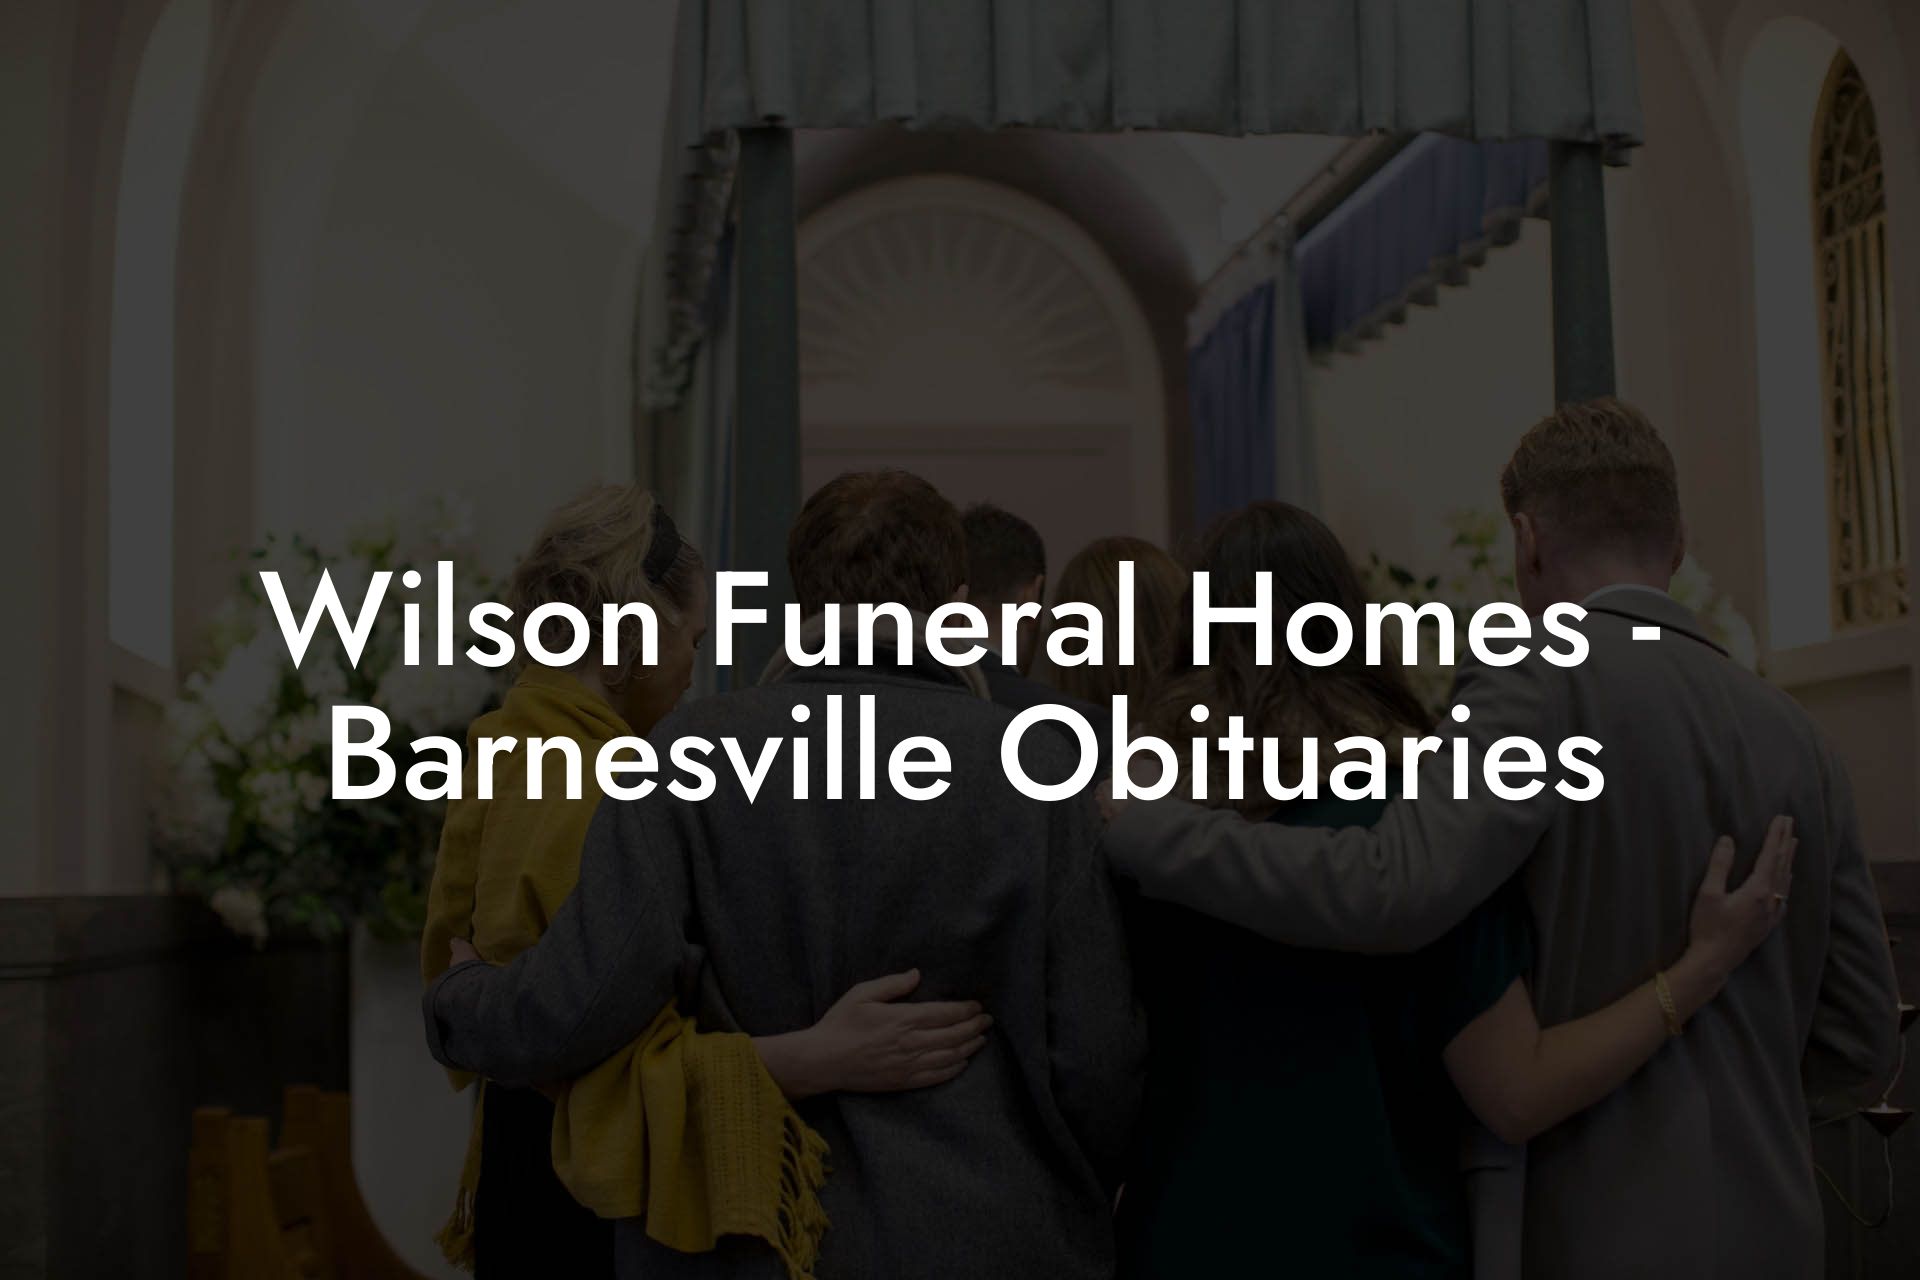 Wilson Funeral Homes - Barnesville Obituaries